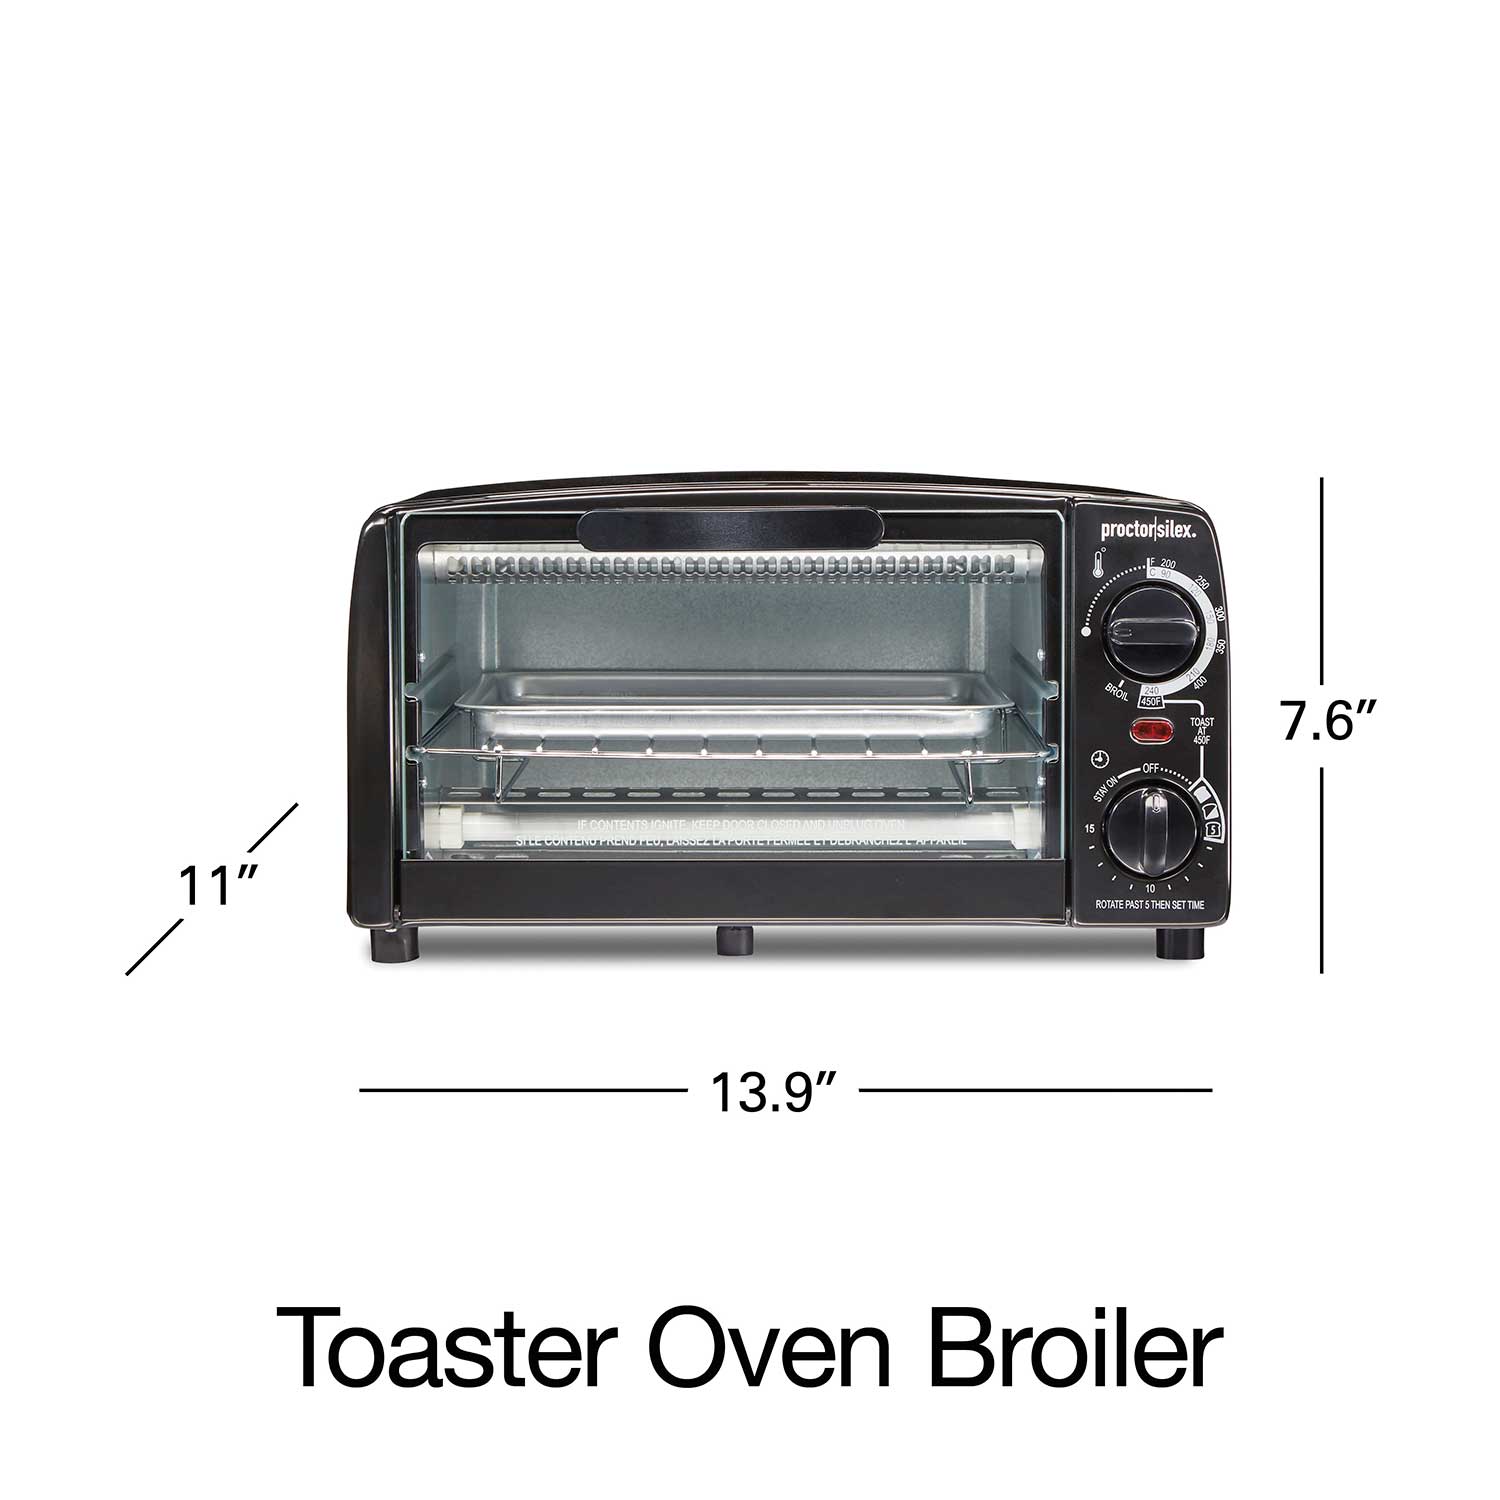 Hamilton Beach 31116PS Proctor 4 Slice Toaster Oven Refresh White Broi